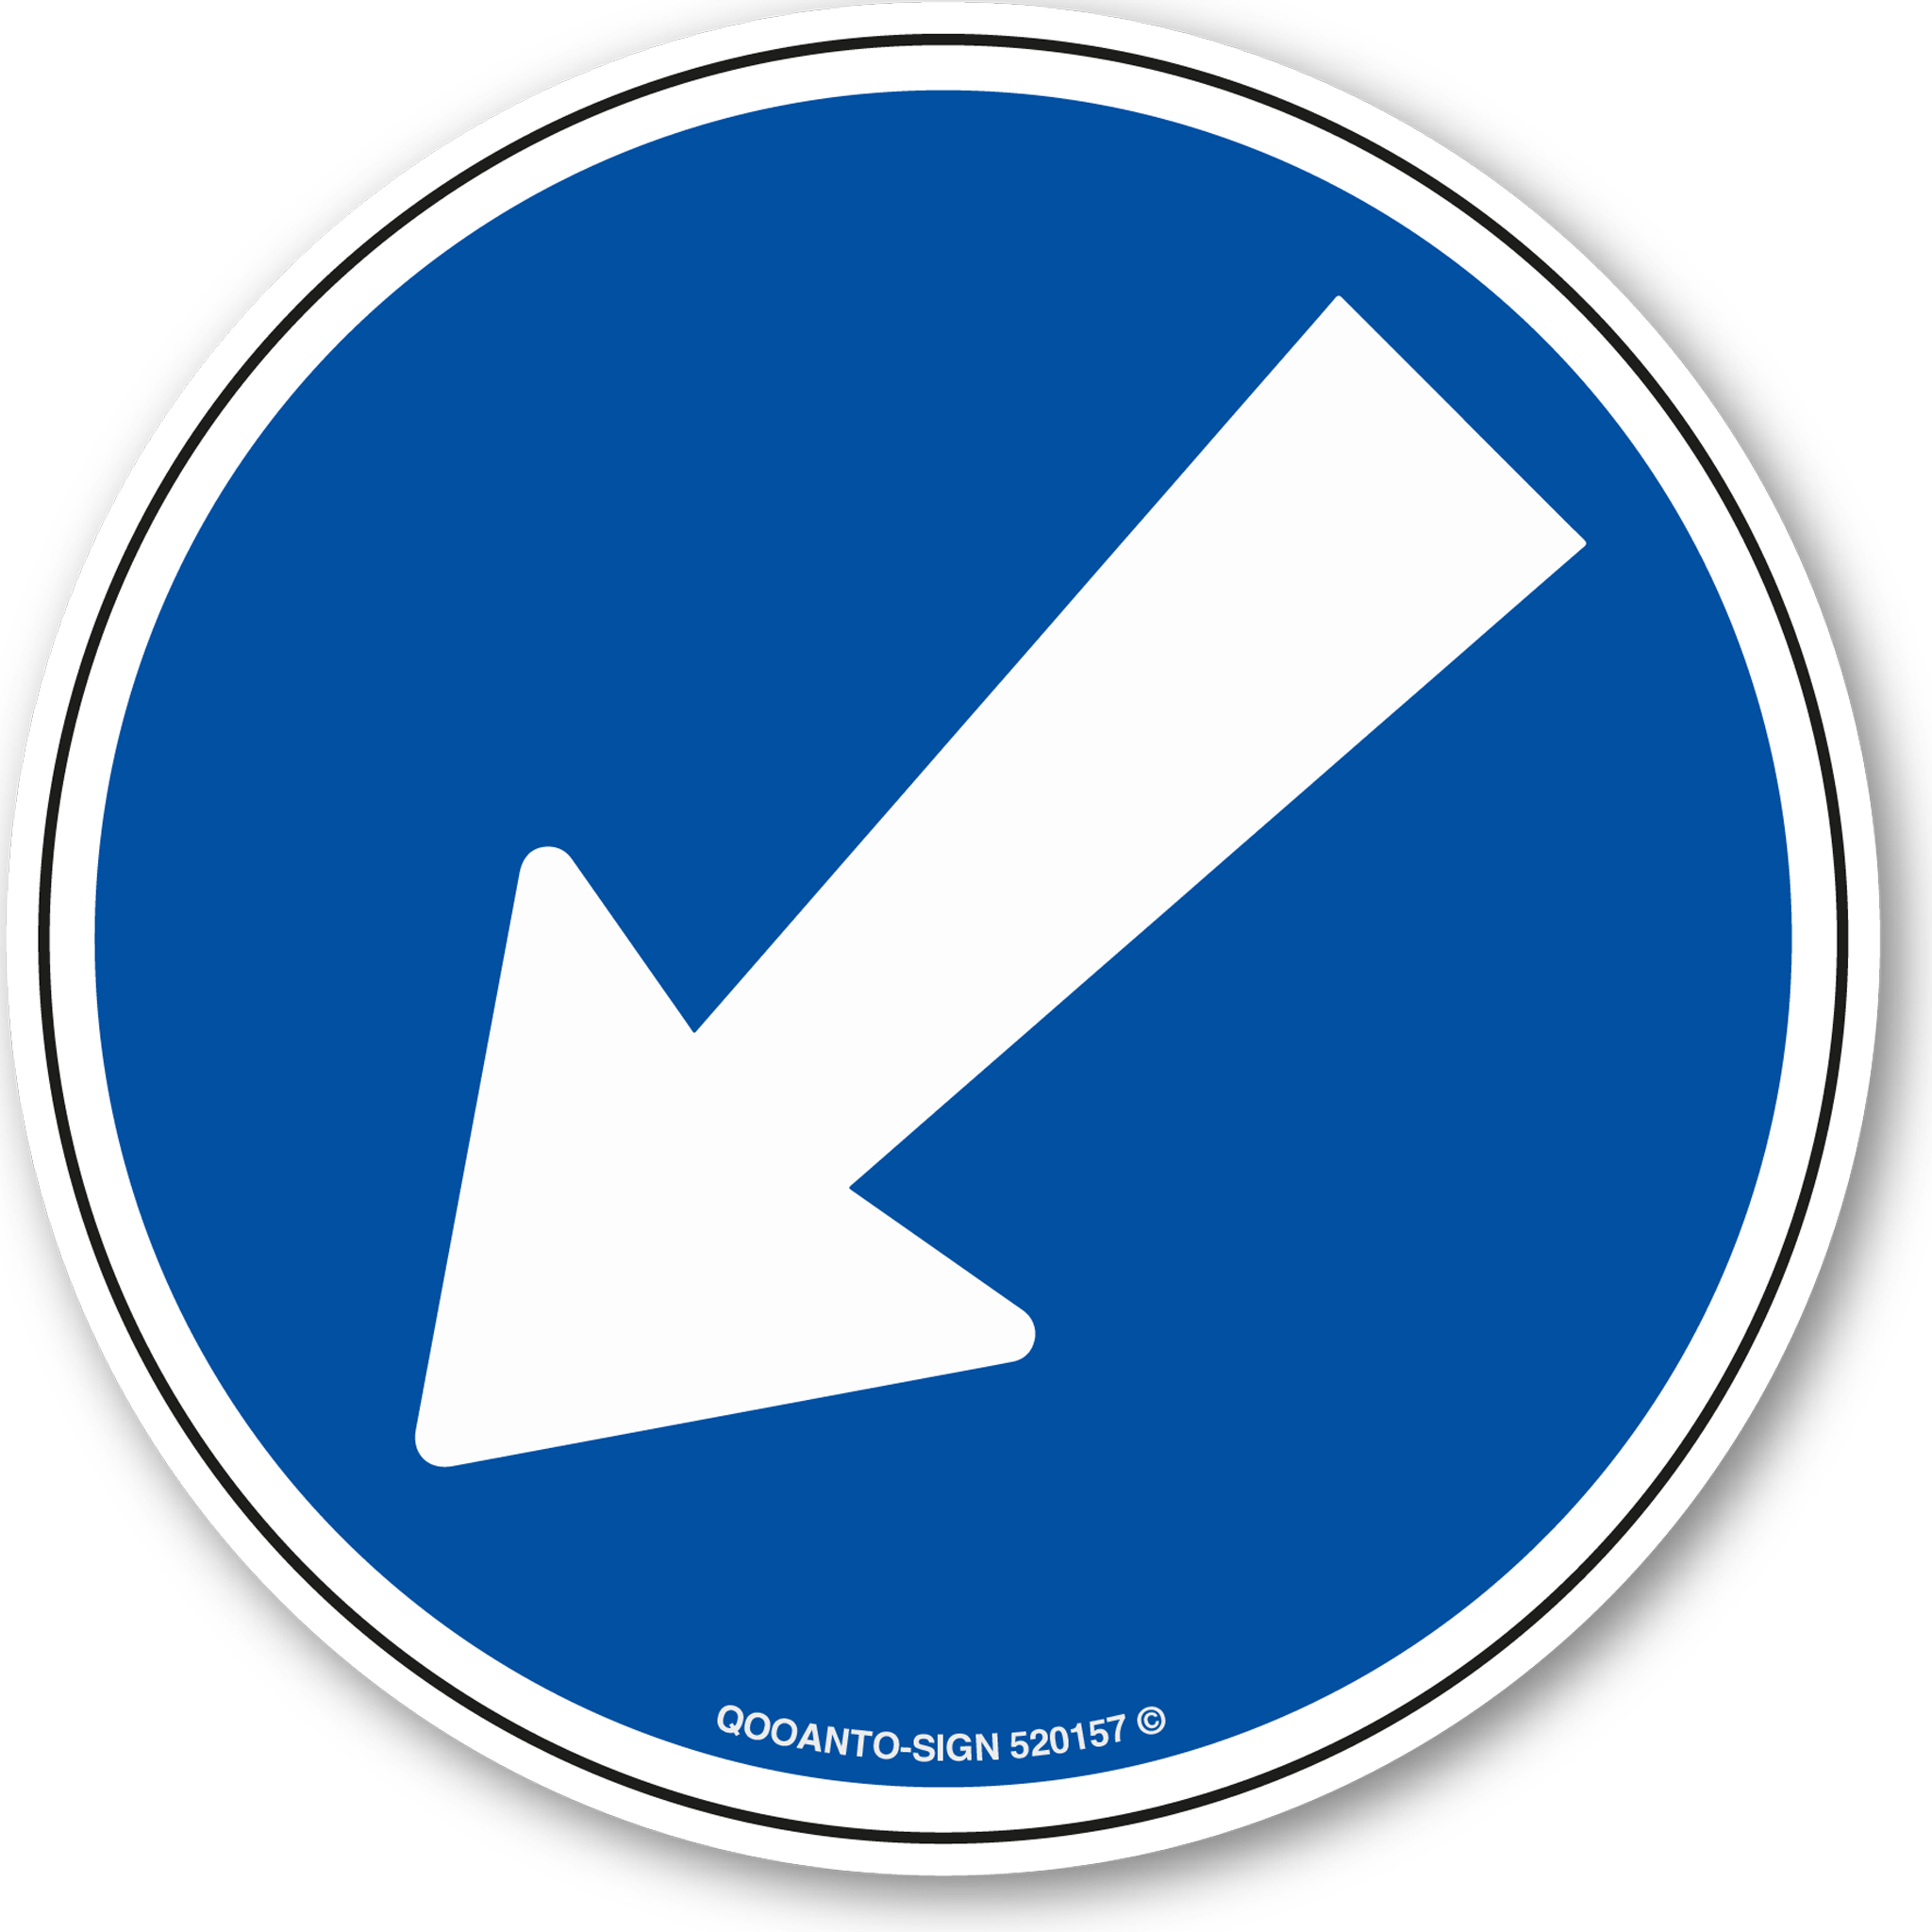 Fahrrichtung links unten, Schild oder Aufkleber